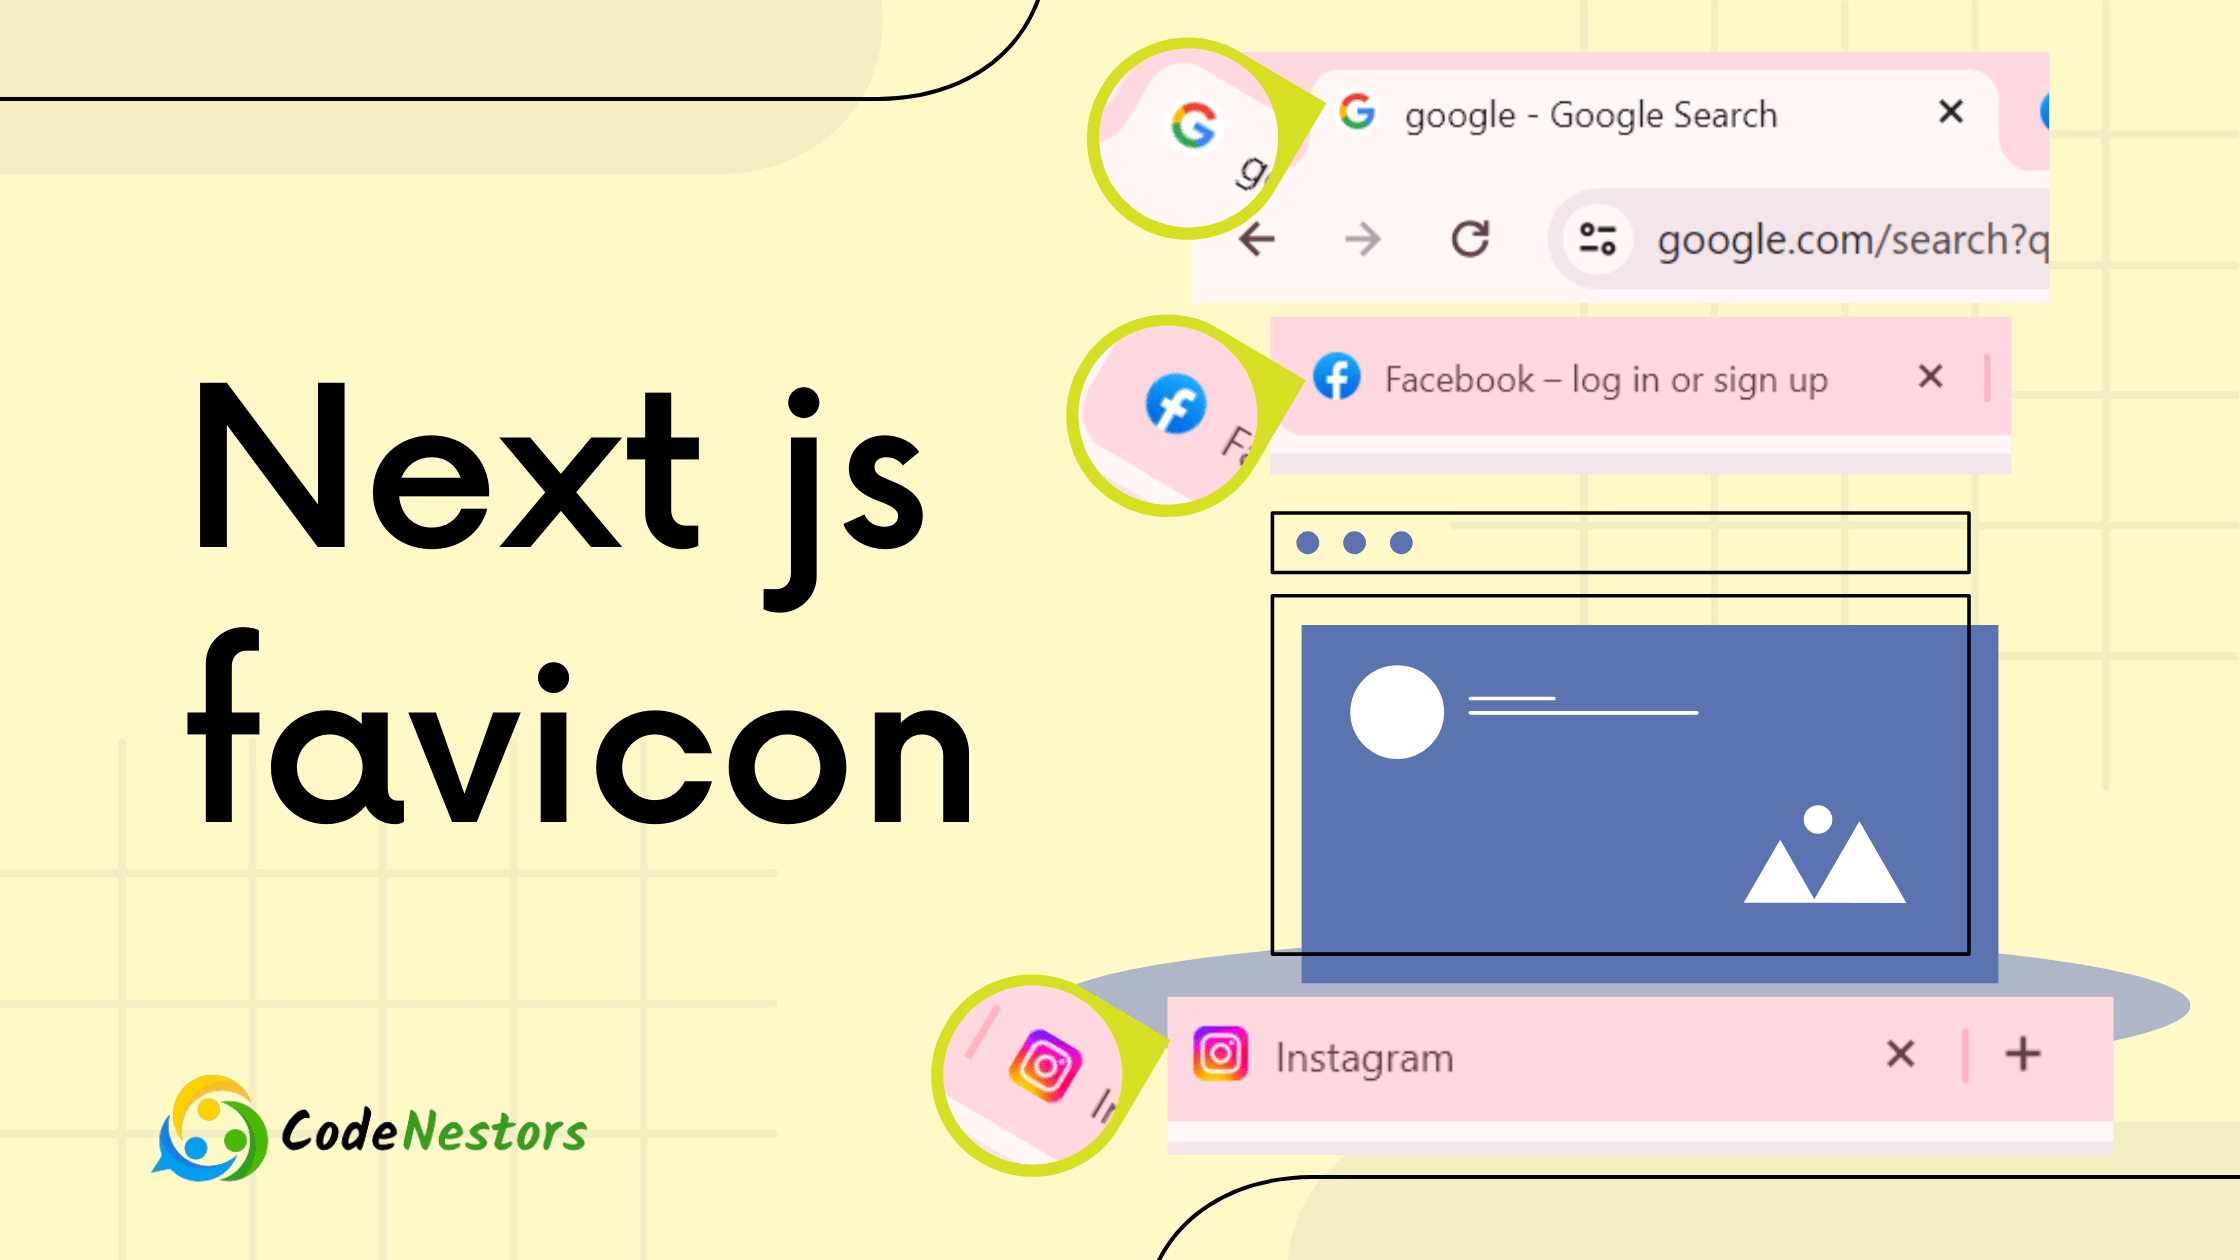 Next js favicon